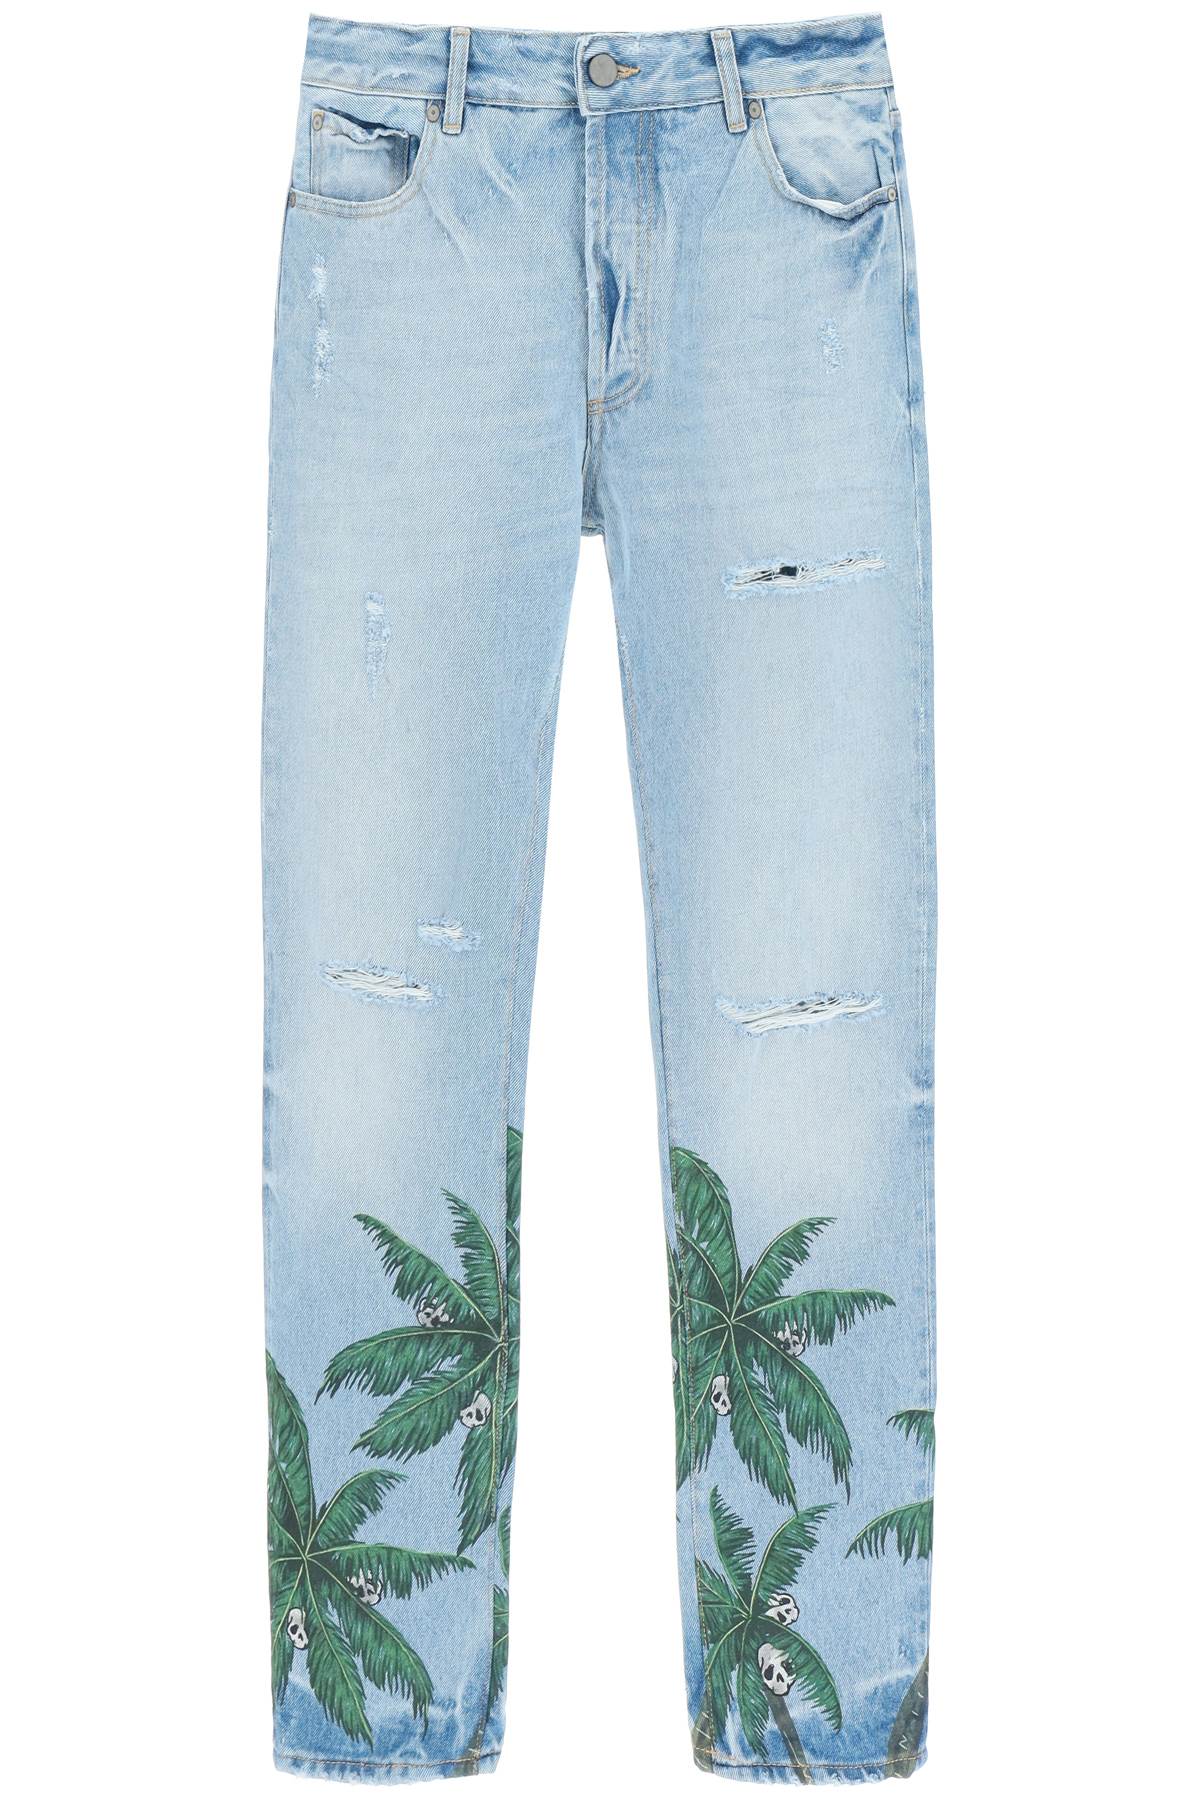 Palm Angels Palm Tree Print Regular Fit Jeans In Distressed Denim